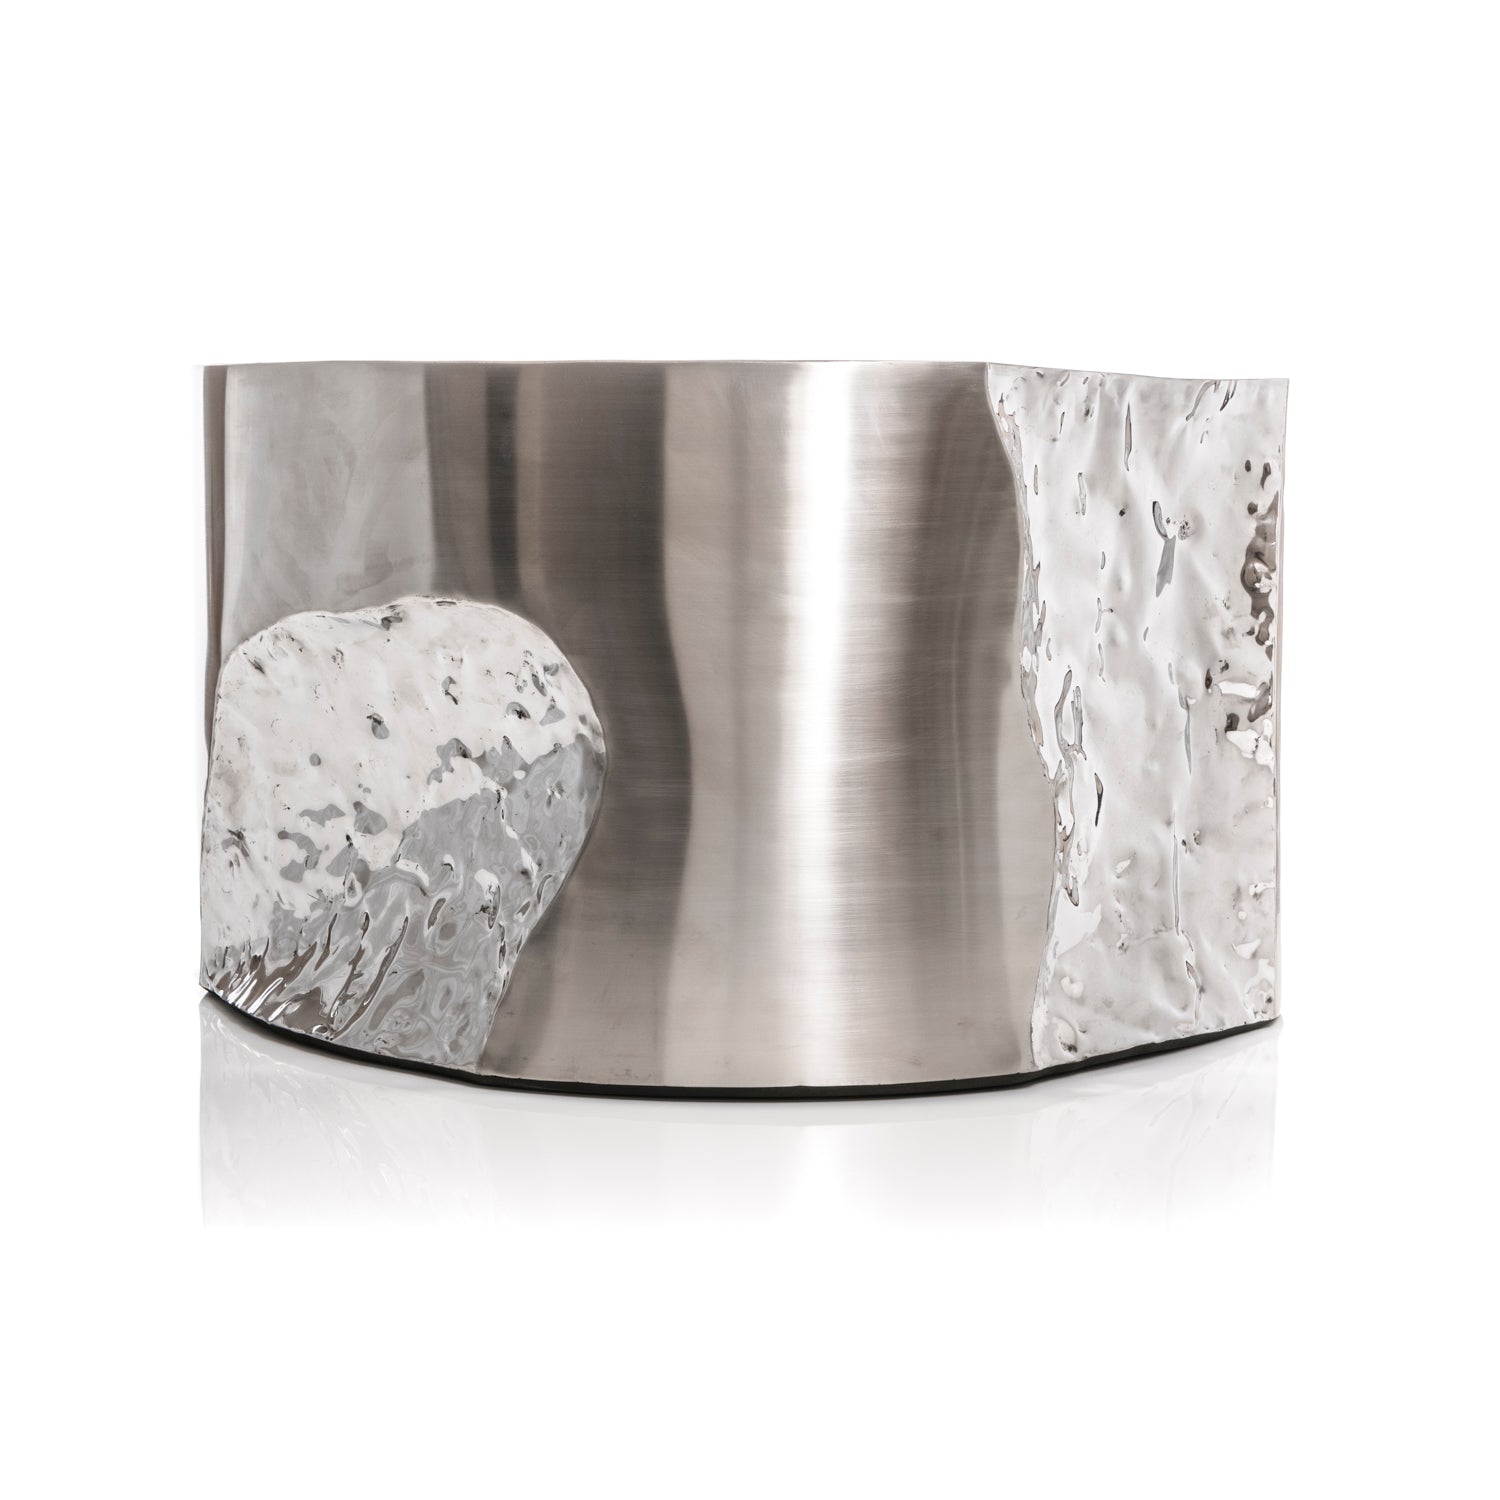 Consolle table in acciaio - Asmat Design